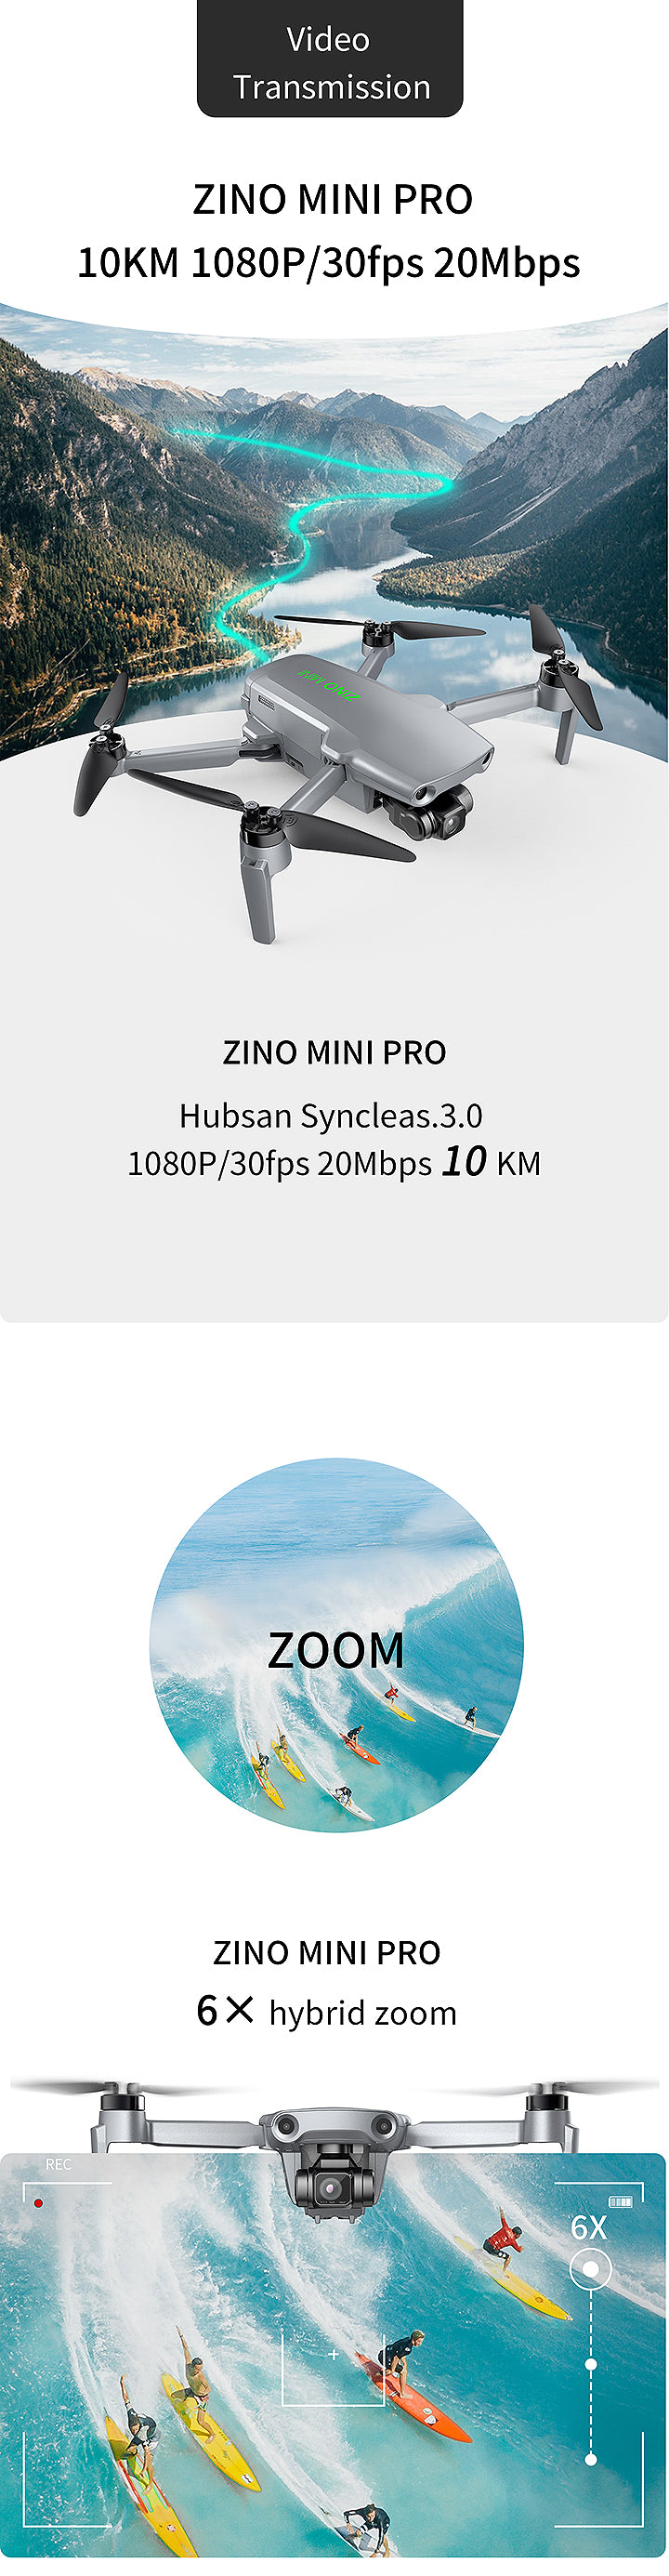 HUBSAN ZINO MINI PRO DRONE 64GB - CARD ONE BATTERY (EX-DISPLAY)